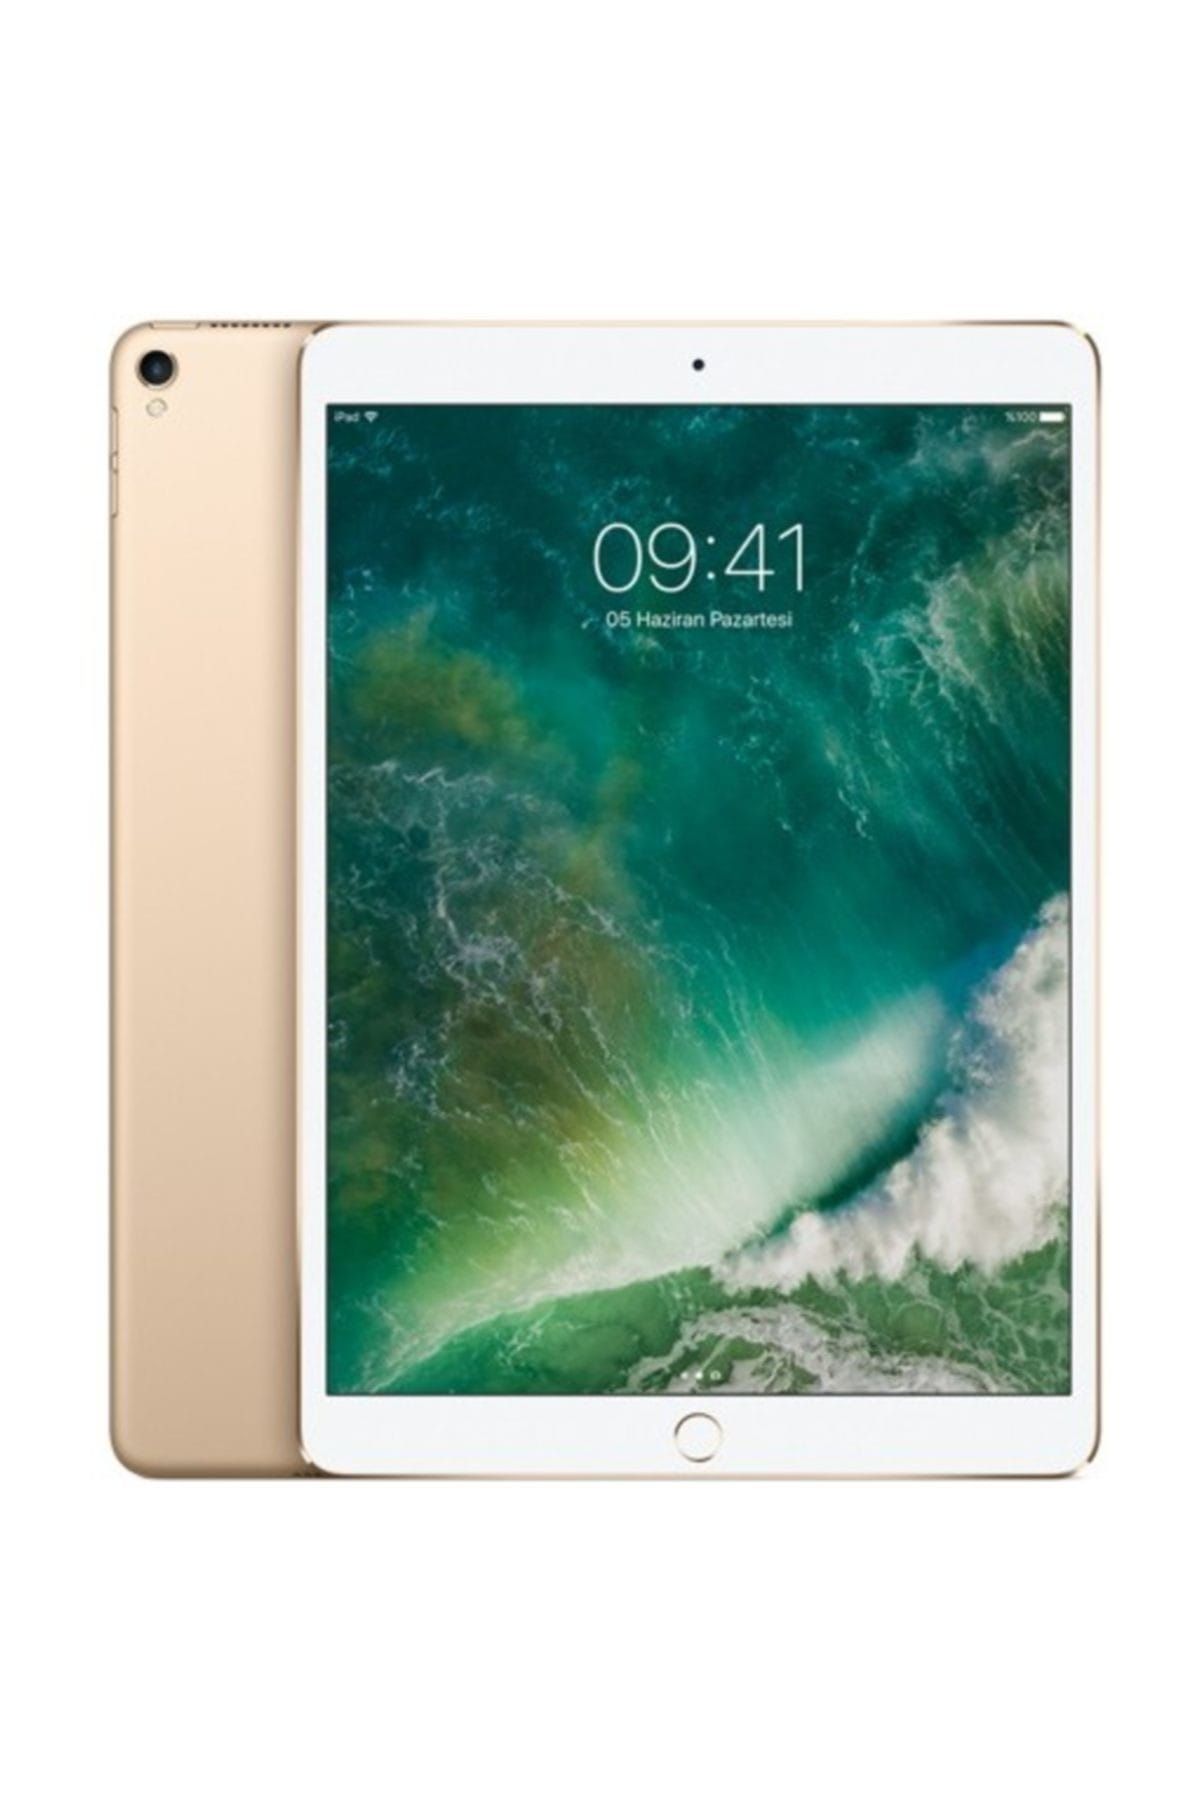 Apple 12.9" iPad Pro Wi-Fi 64GB Gold-MQDD2TU/A